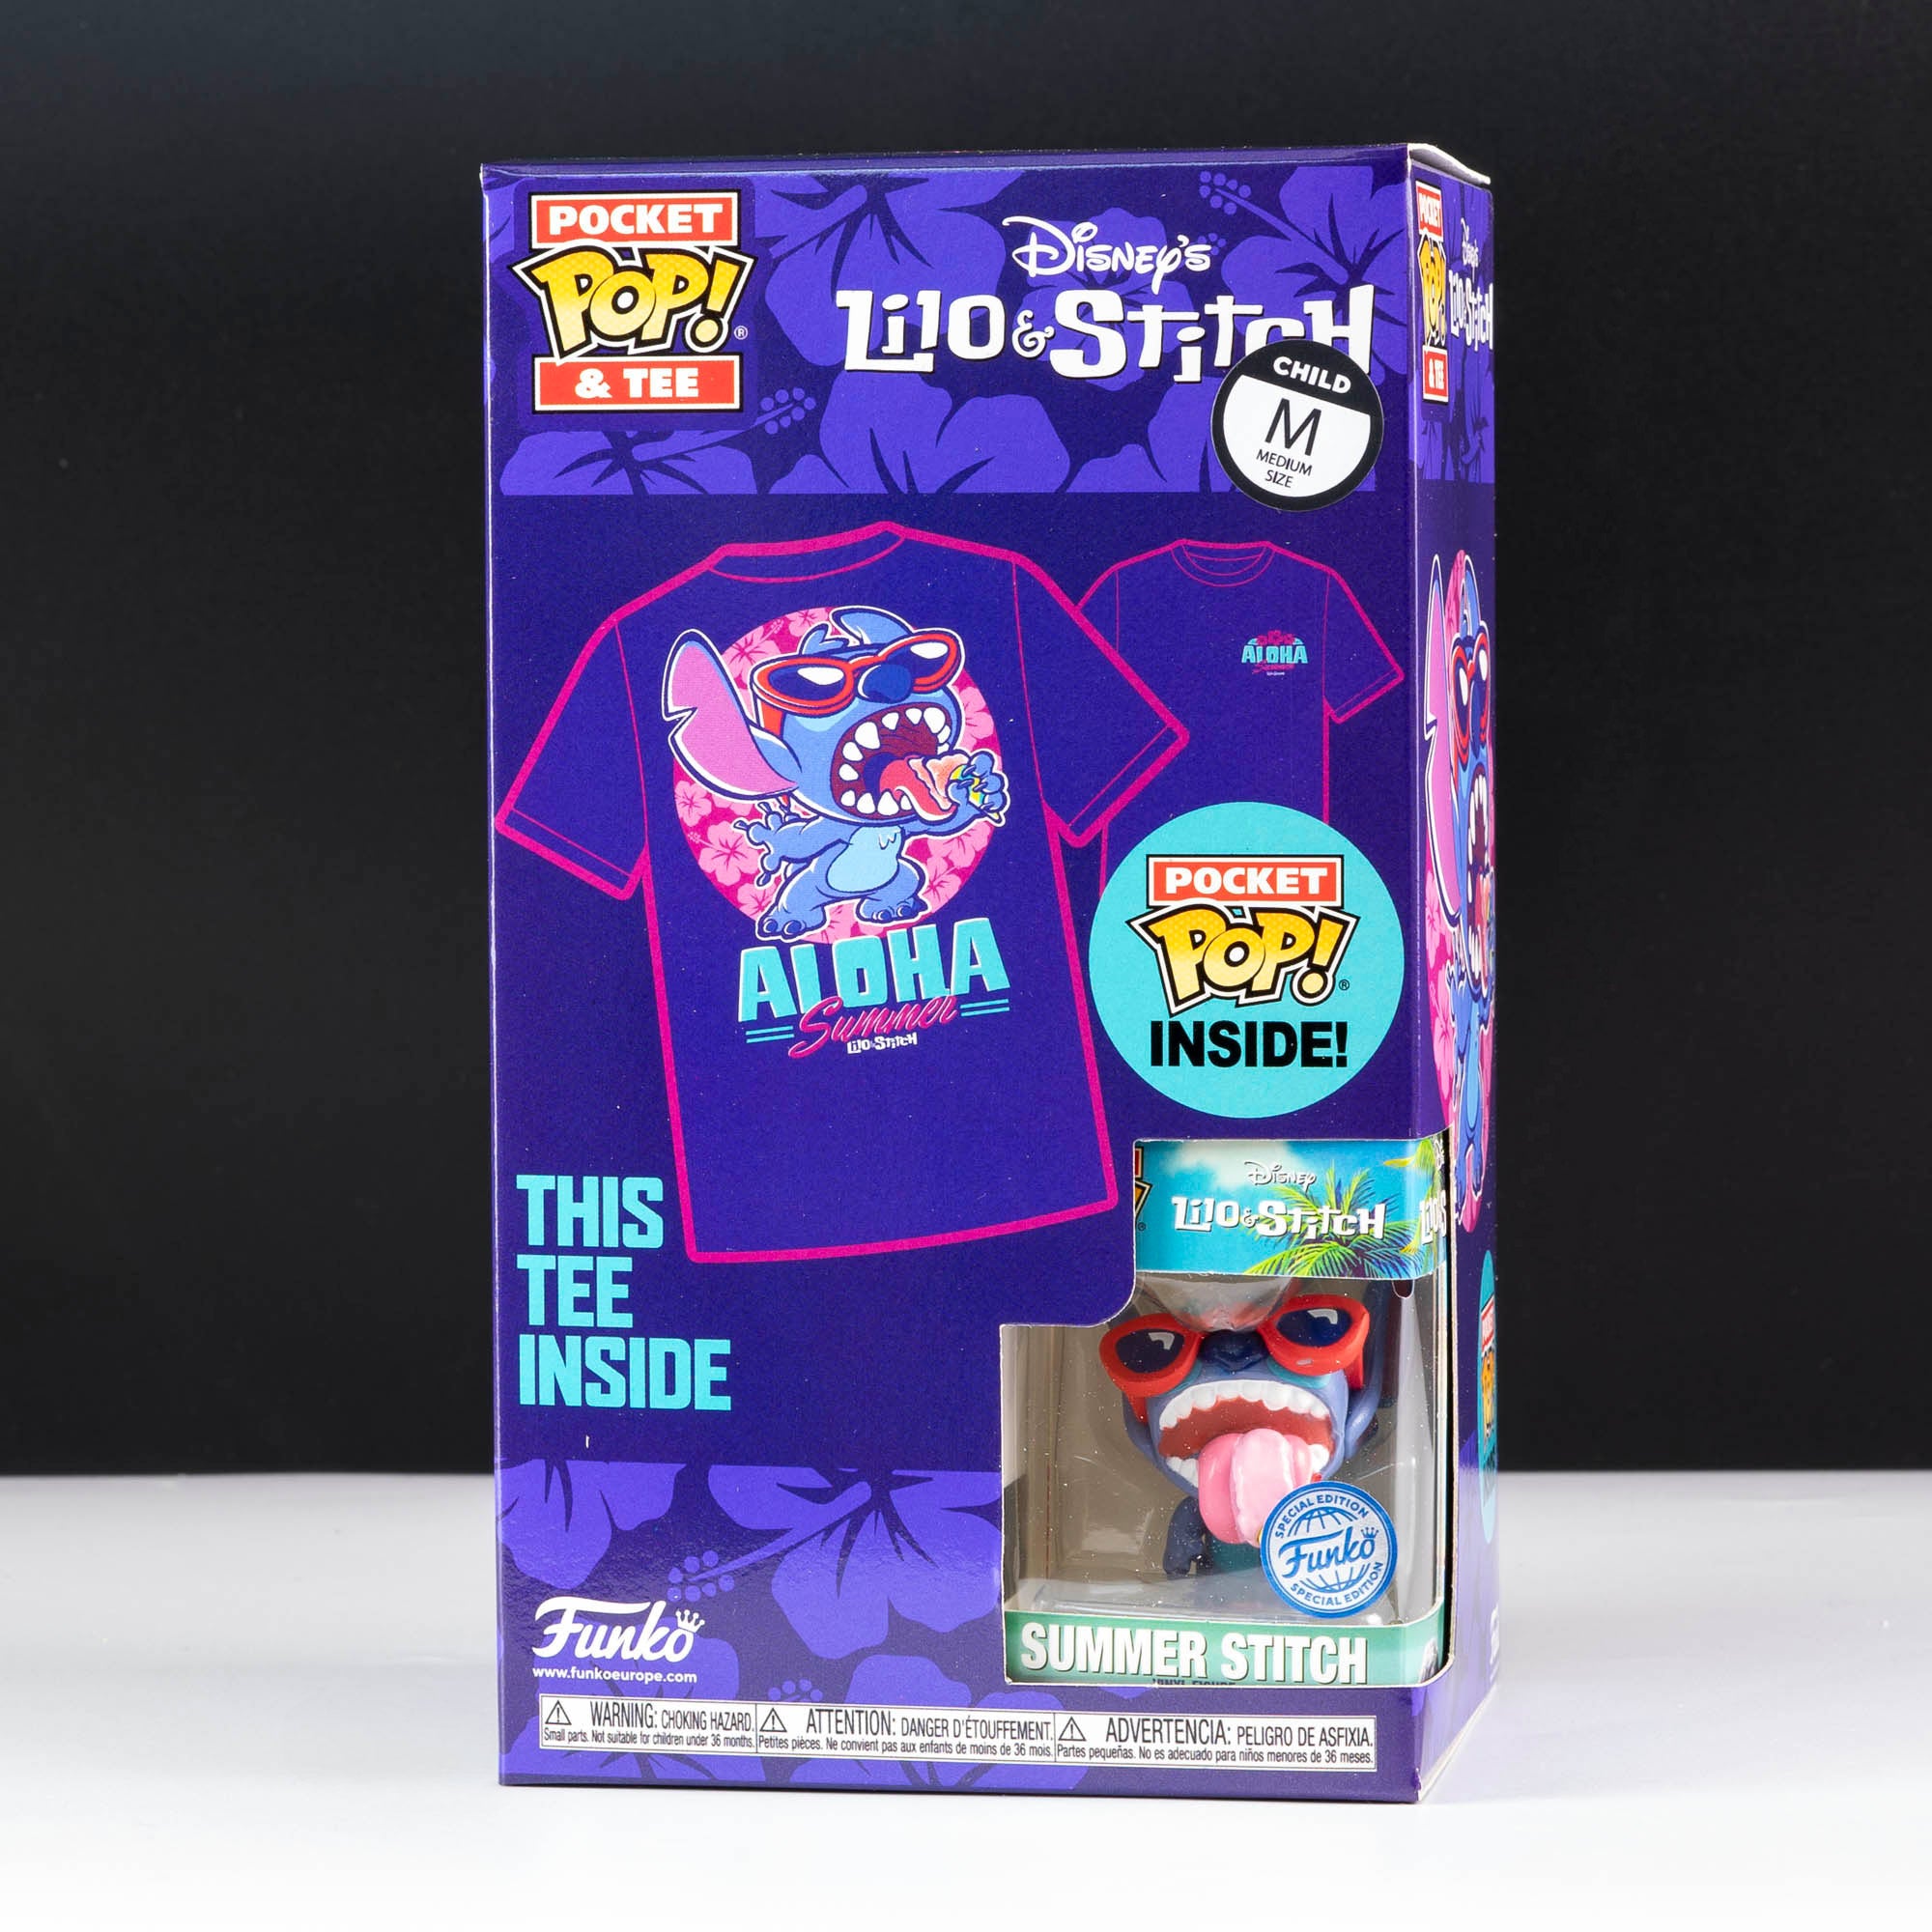 Disney Summer Stitch Pocket Pop! Vinyl and Tee Set for Kids